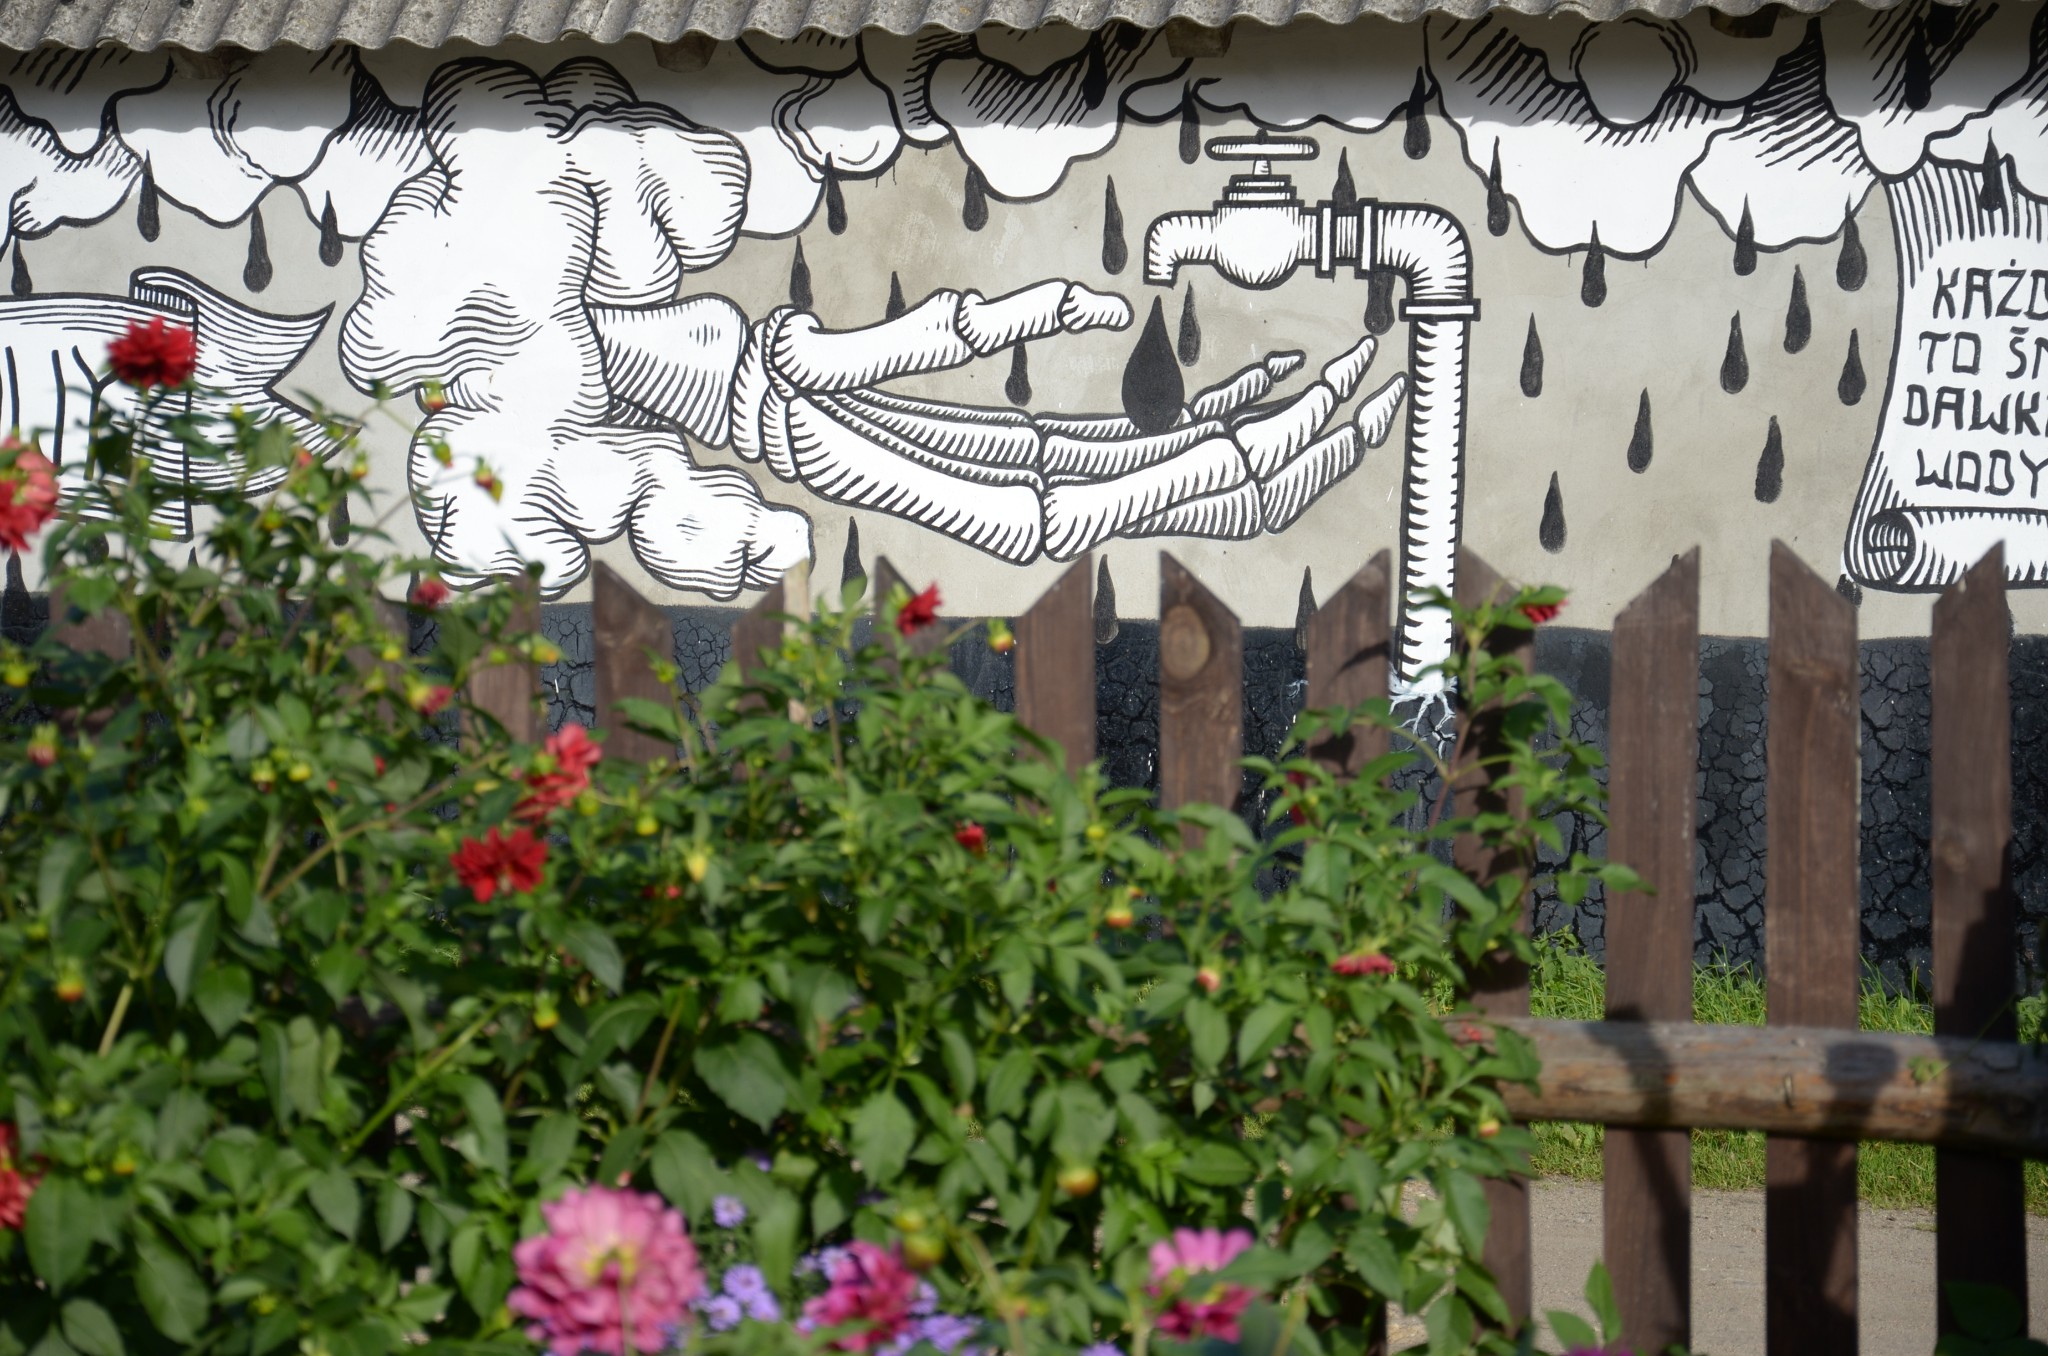 Artist mural on Sawicki’s barn, Poland. (Image: Dimiter Kenarov)